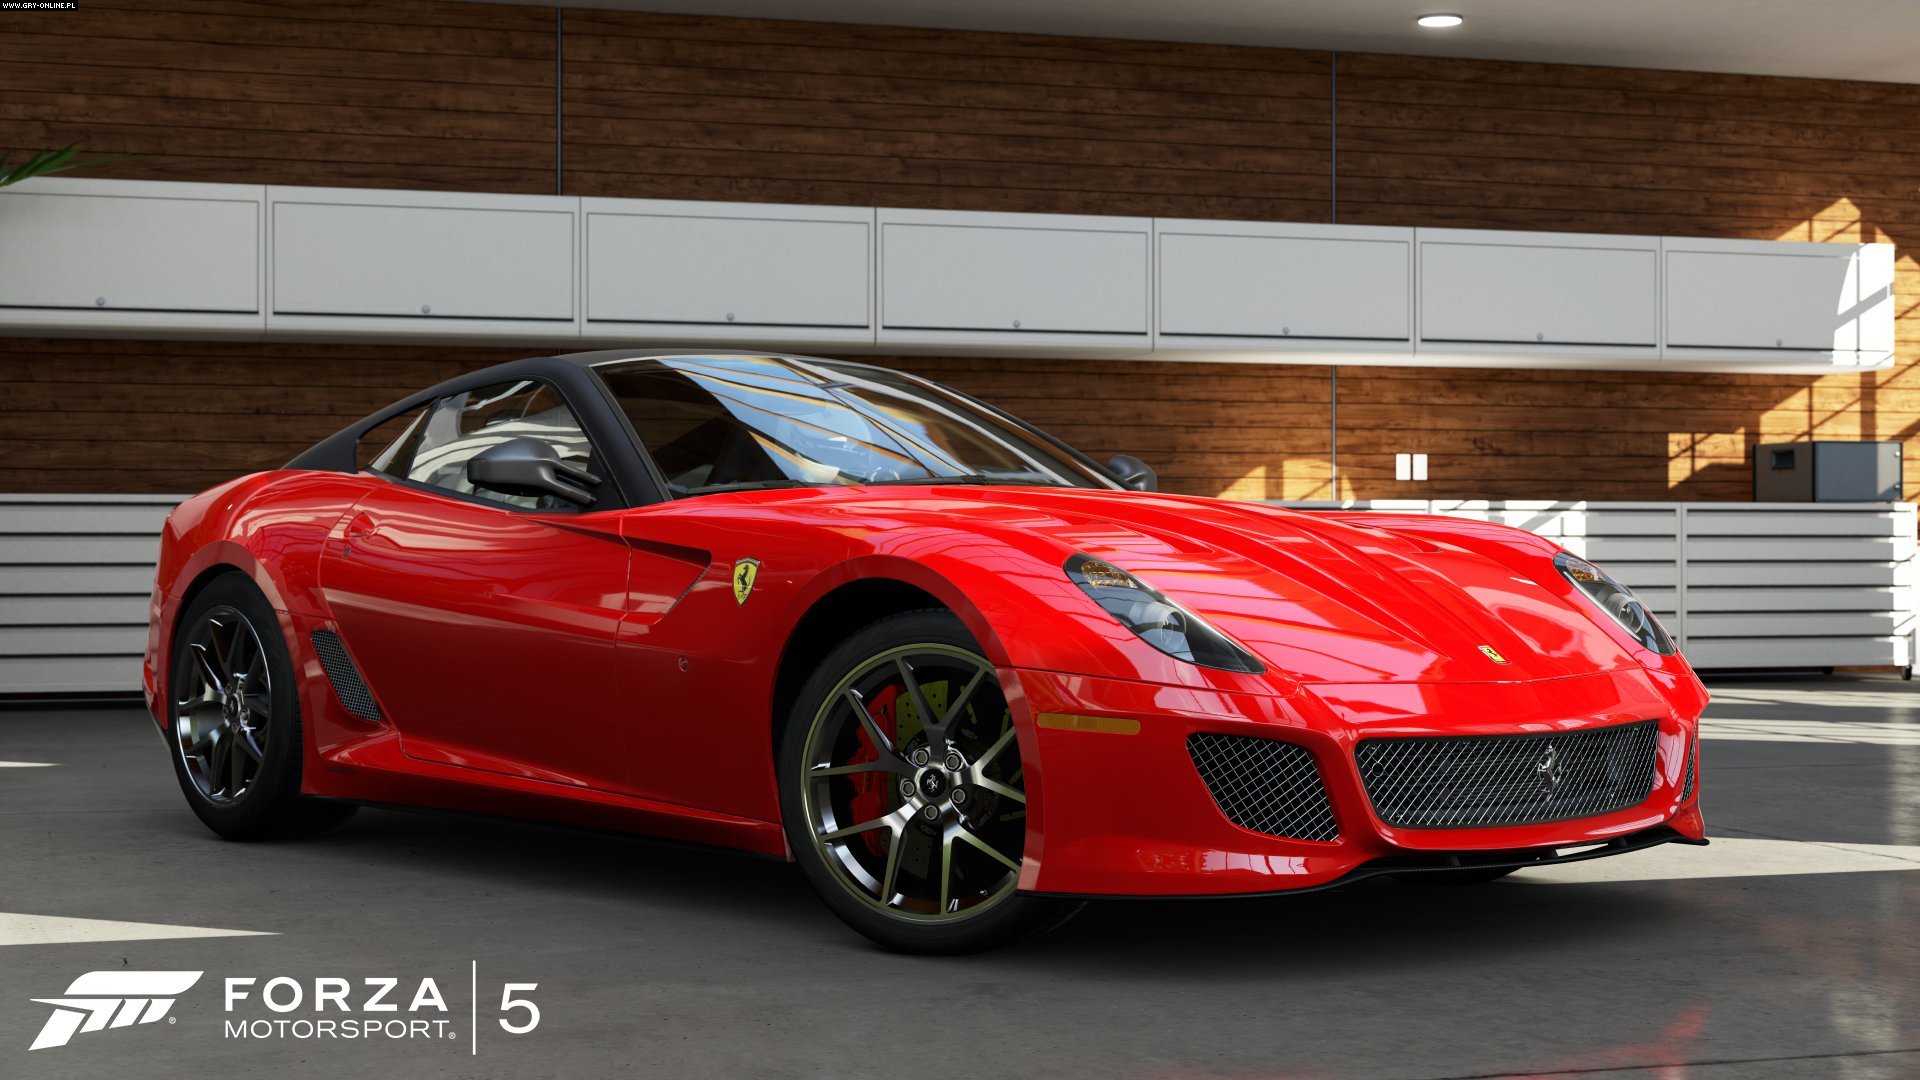 Baixar papel de parede para celular de Forza Motorsport 5, Videogame gratuito.